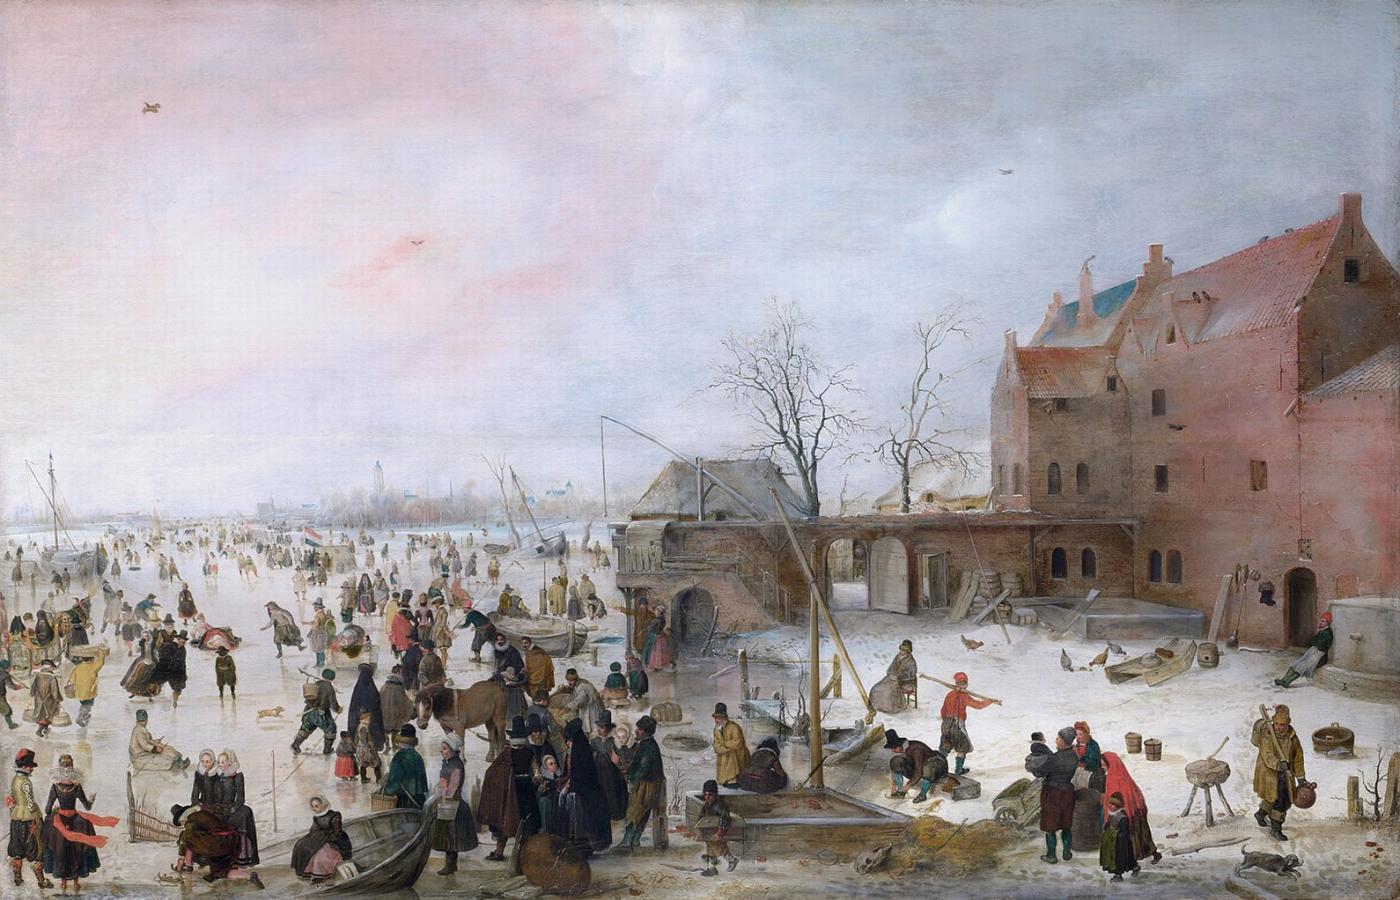 Hendric Avercamp. Scena na lodzie pod miastem. 1610 r.